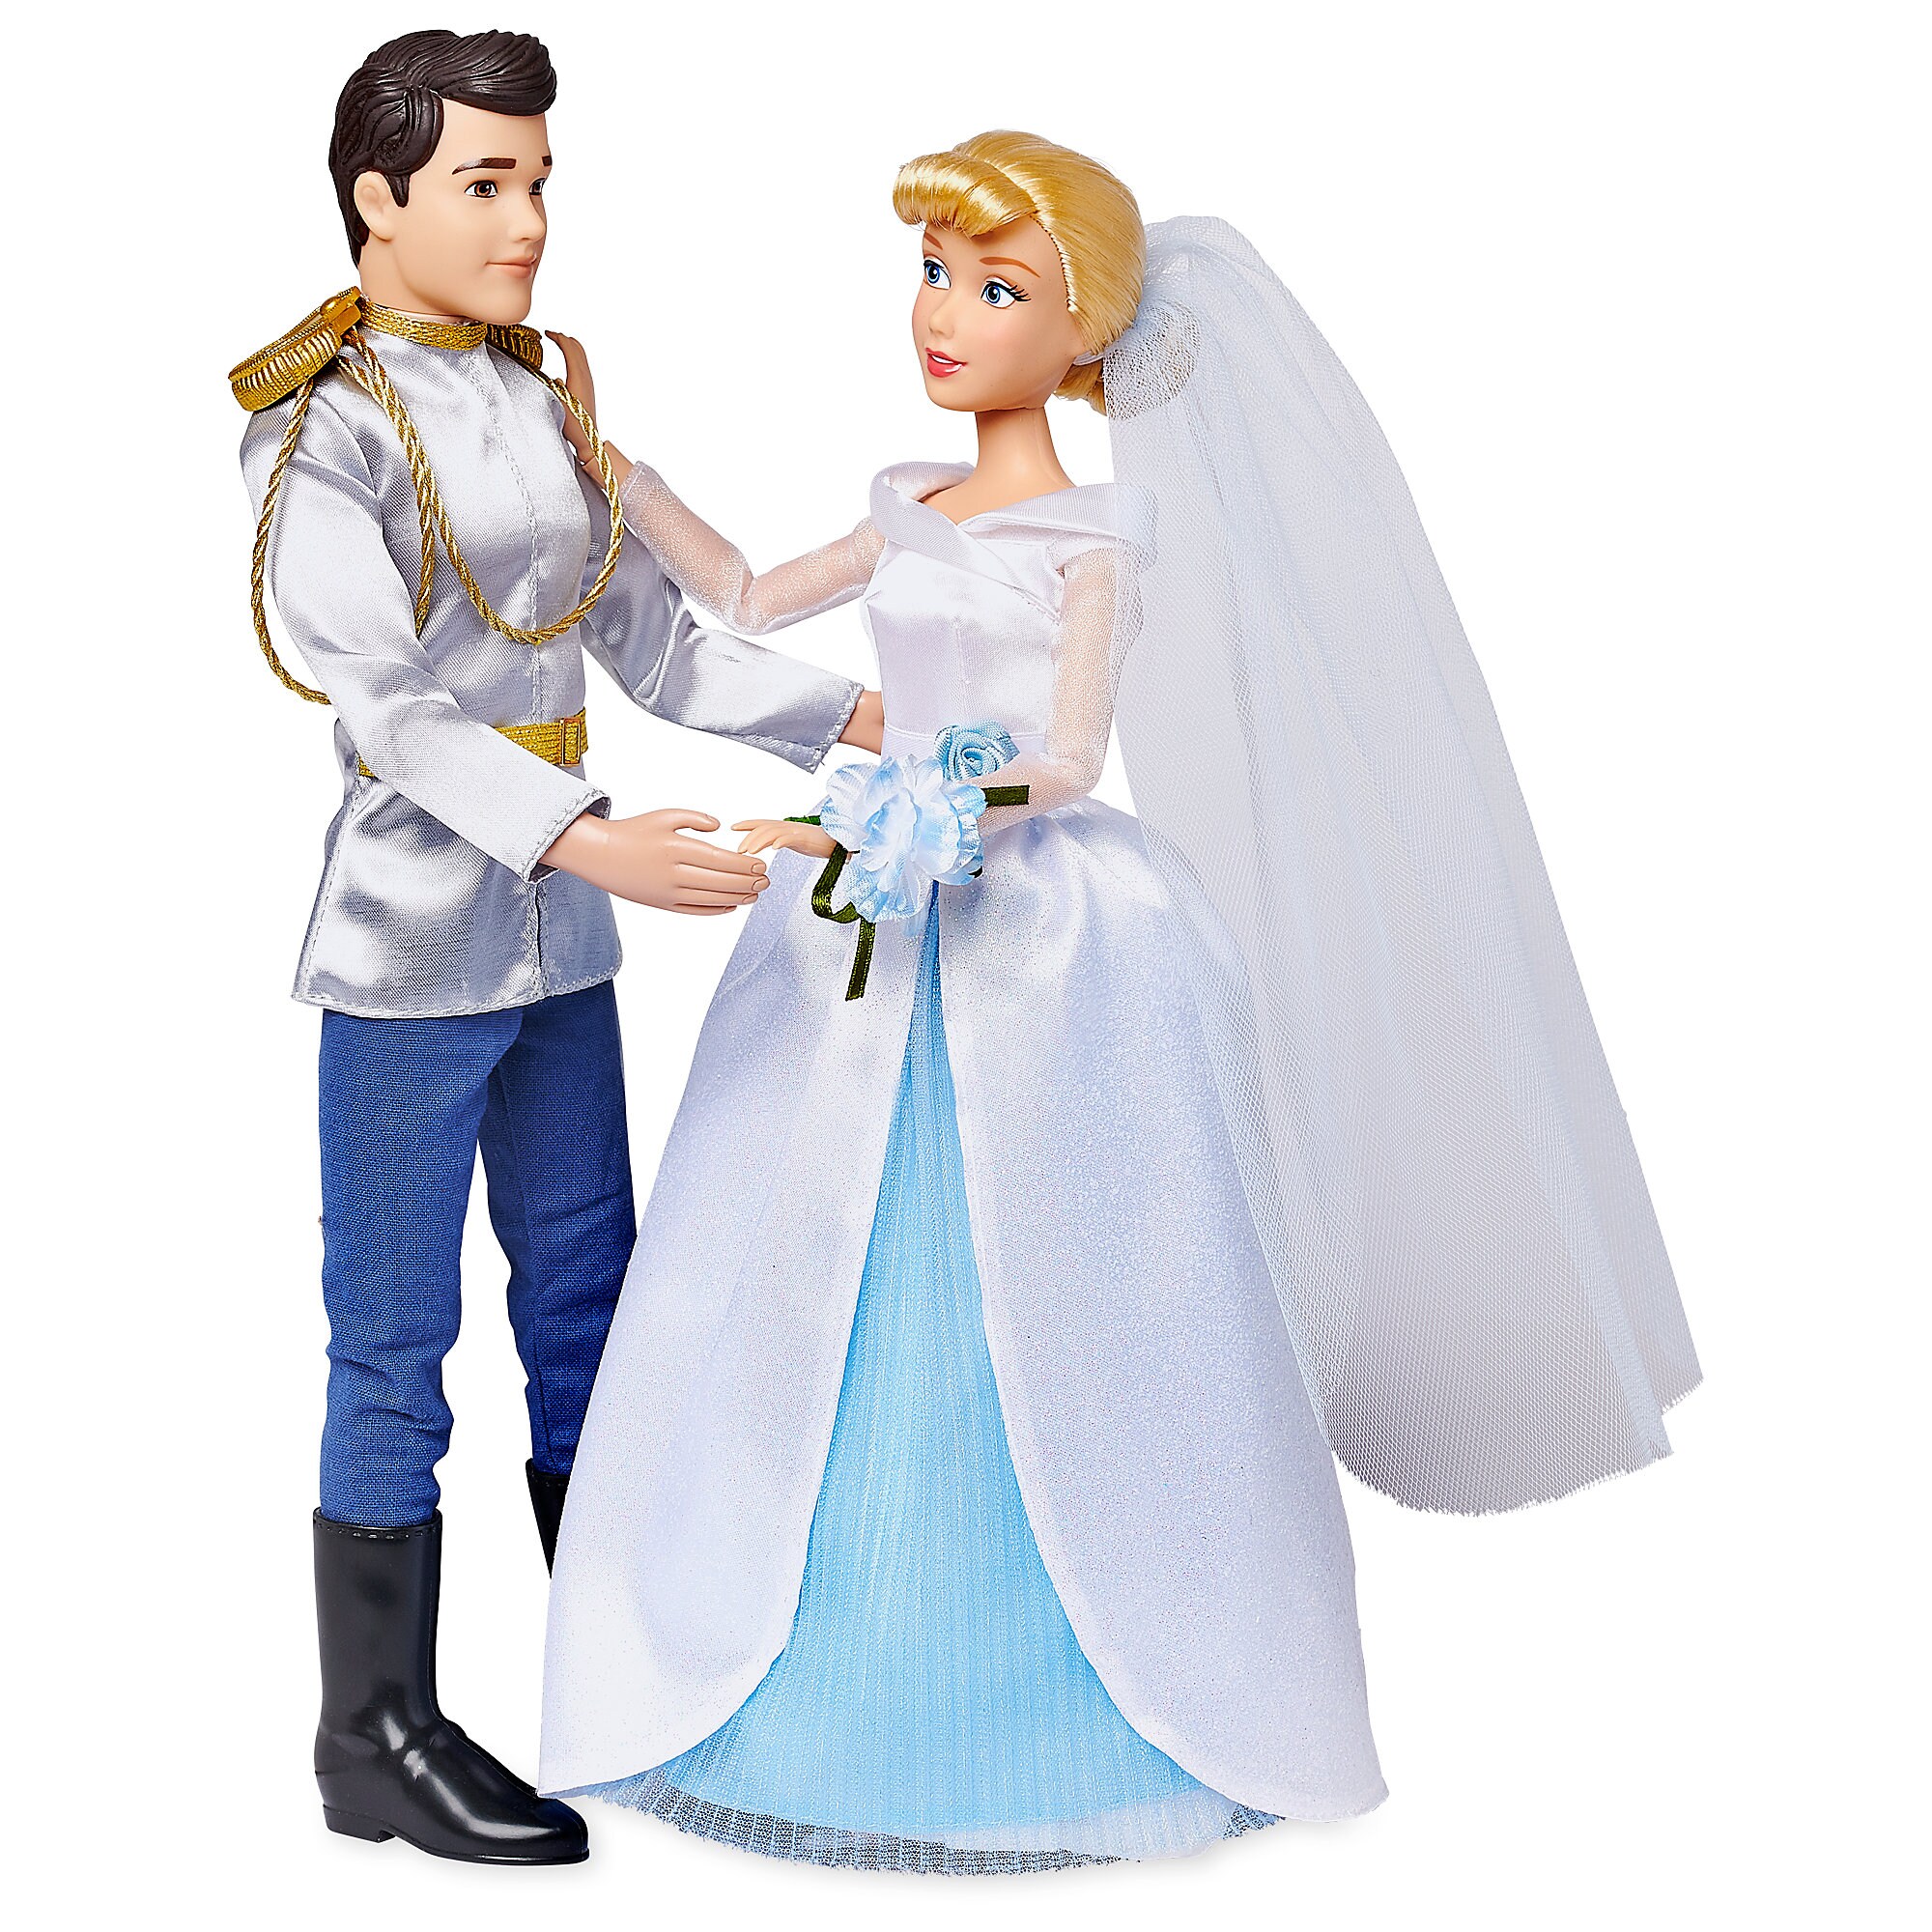 Cinderella and Prince Charming Classic Wedding Doll Set